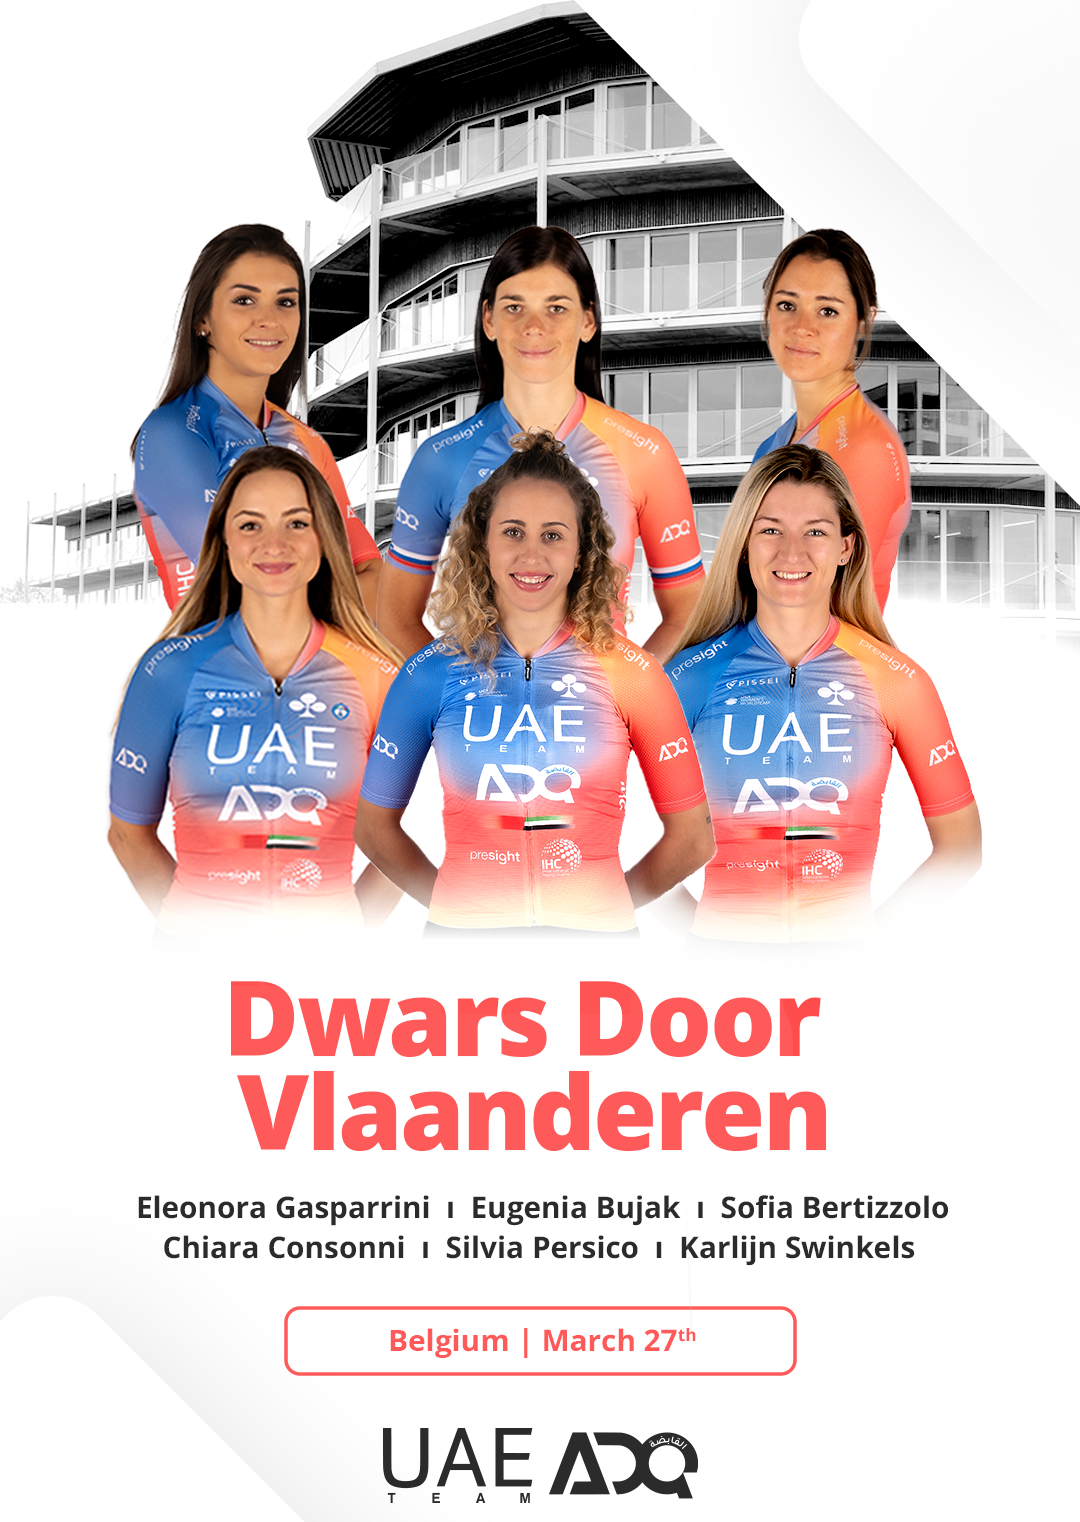 uae-team-adq-for-dwars-and-tour-des-flandres